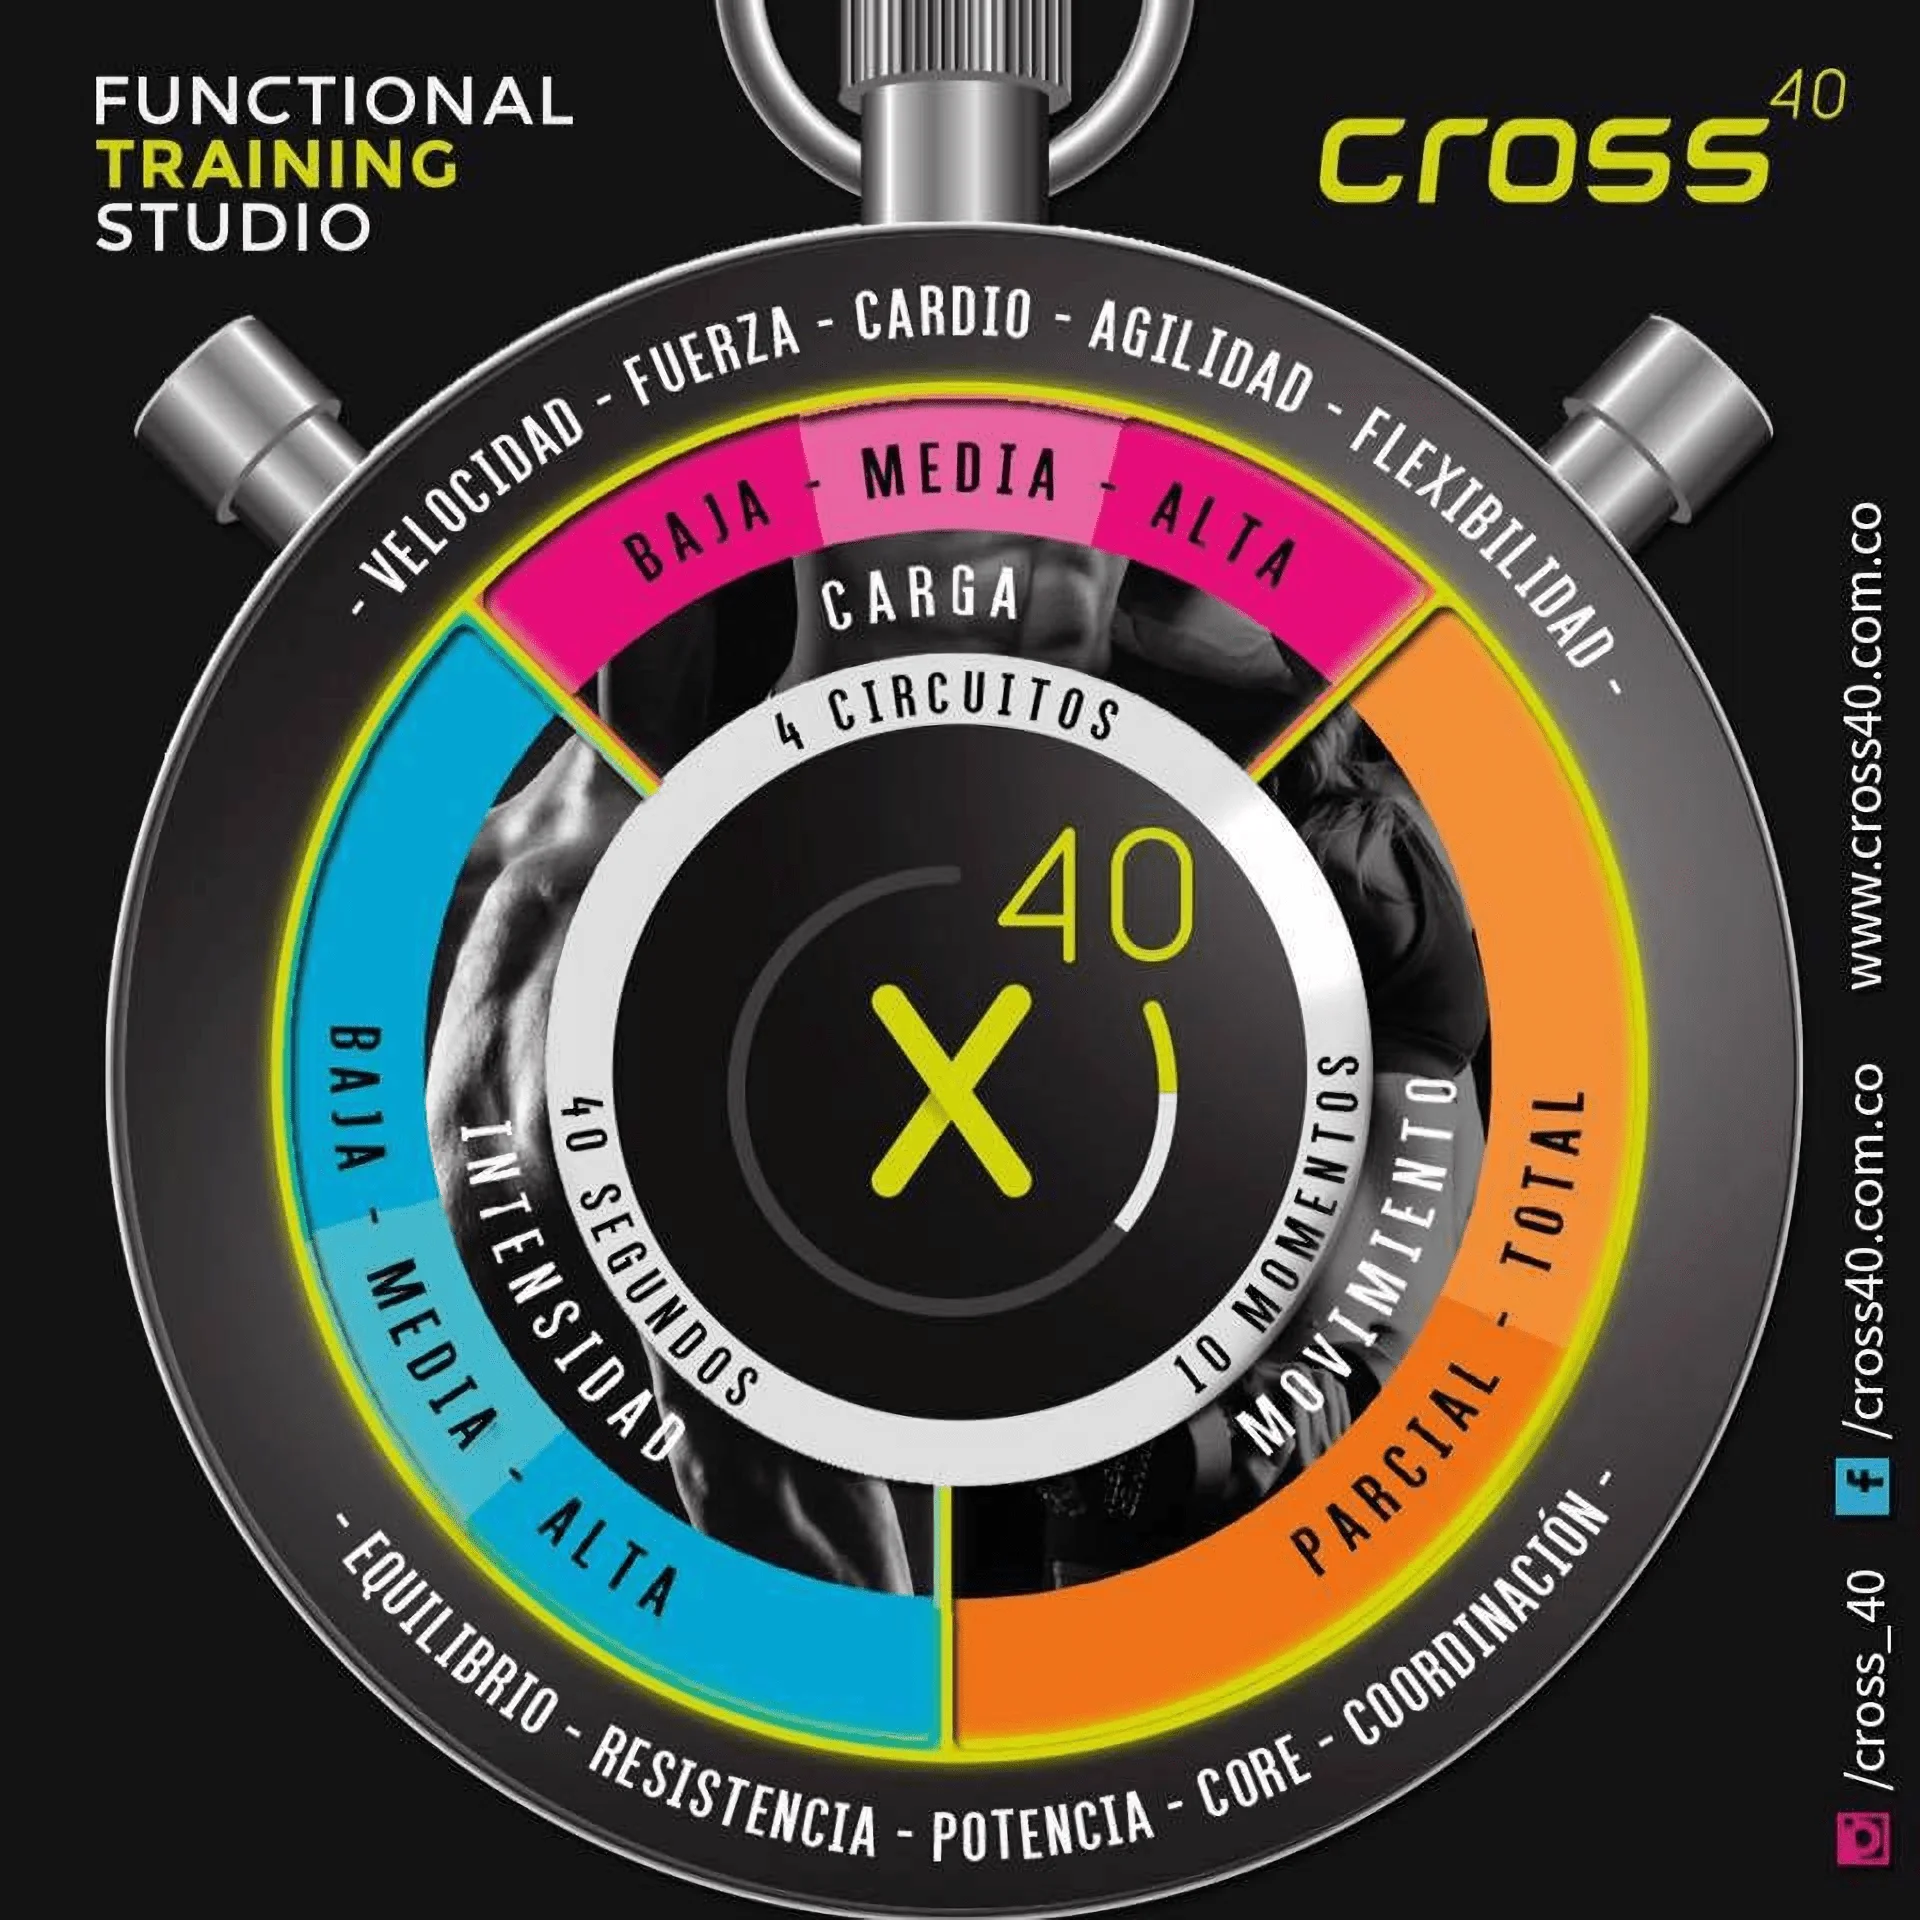 Crossfit-cross40-9358